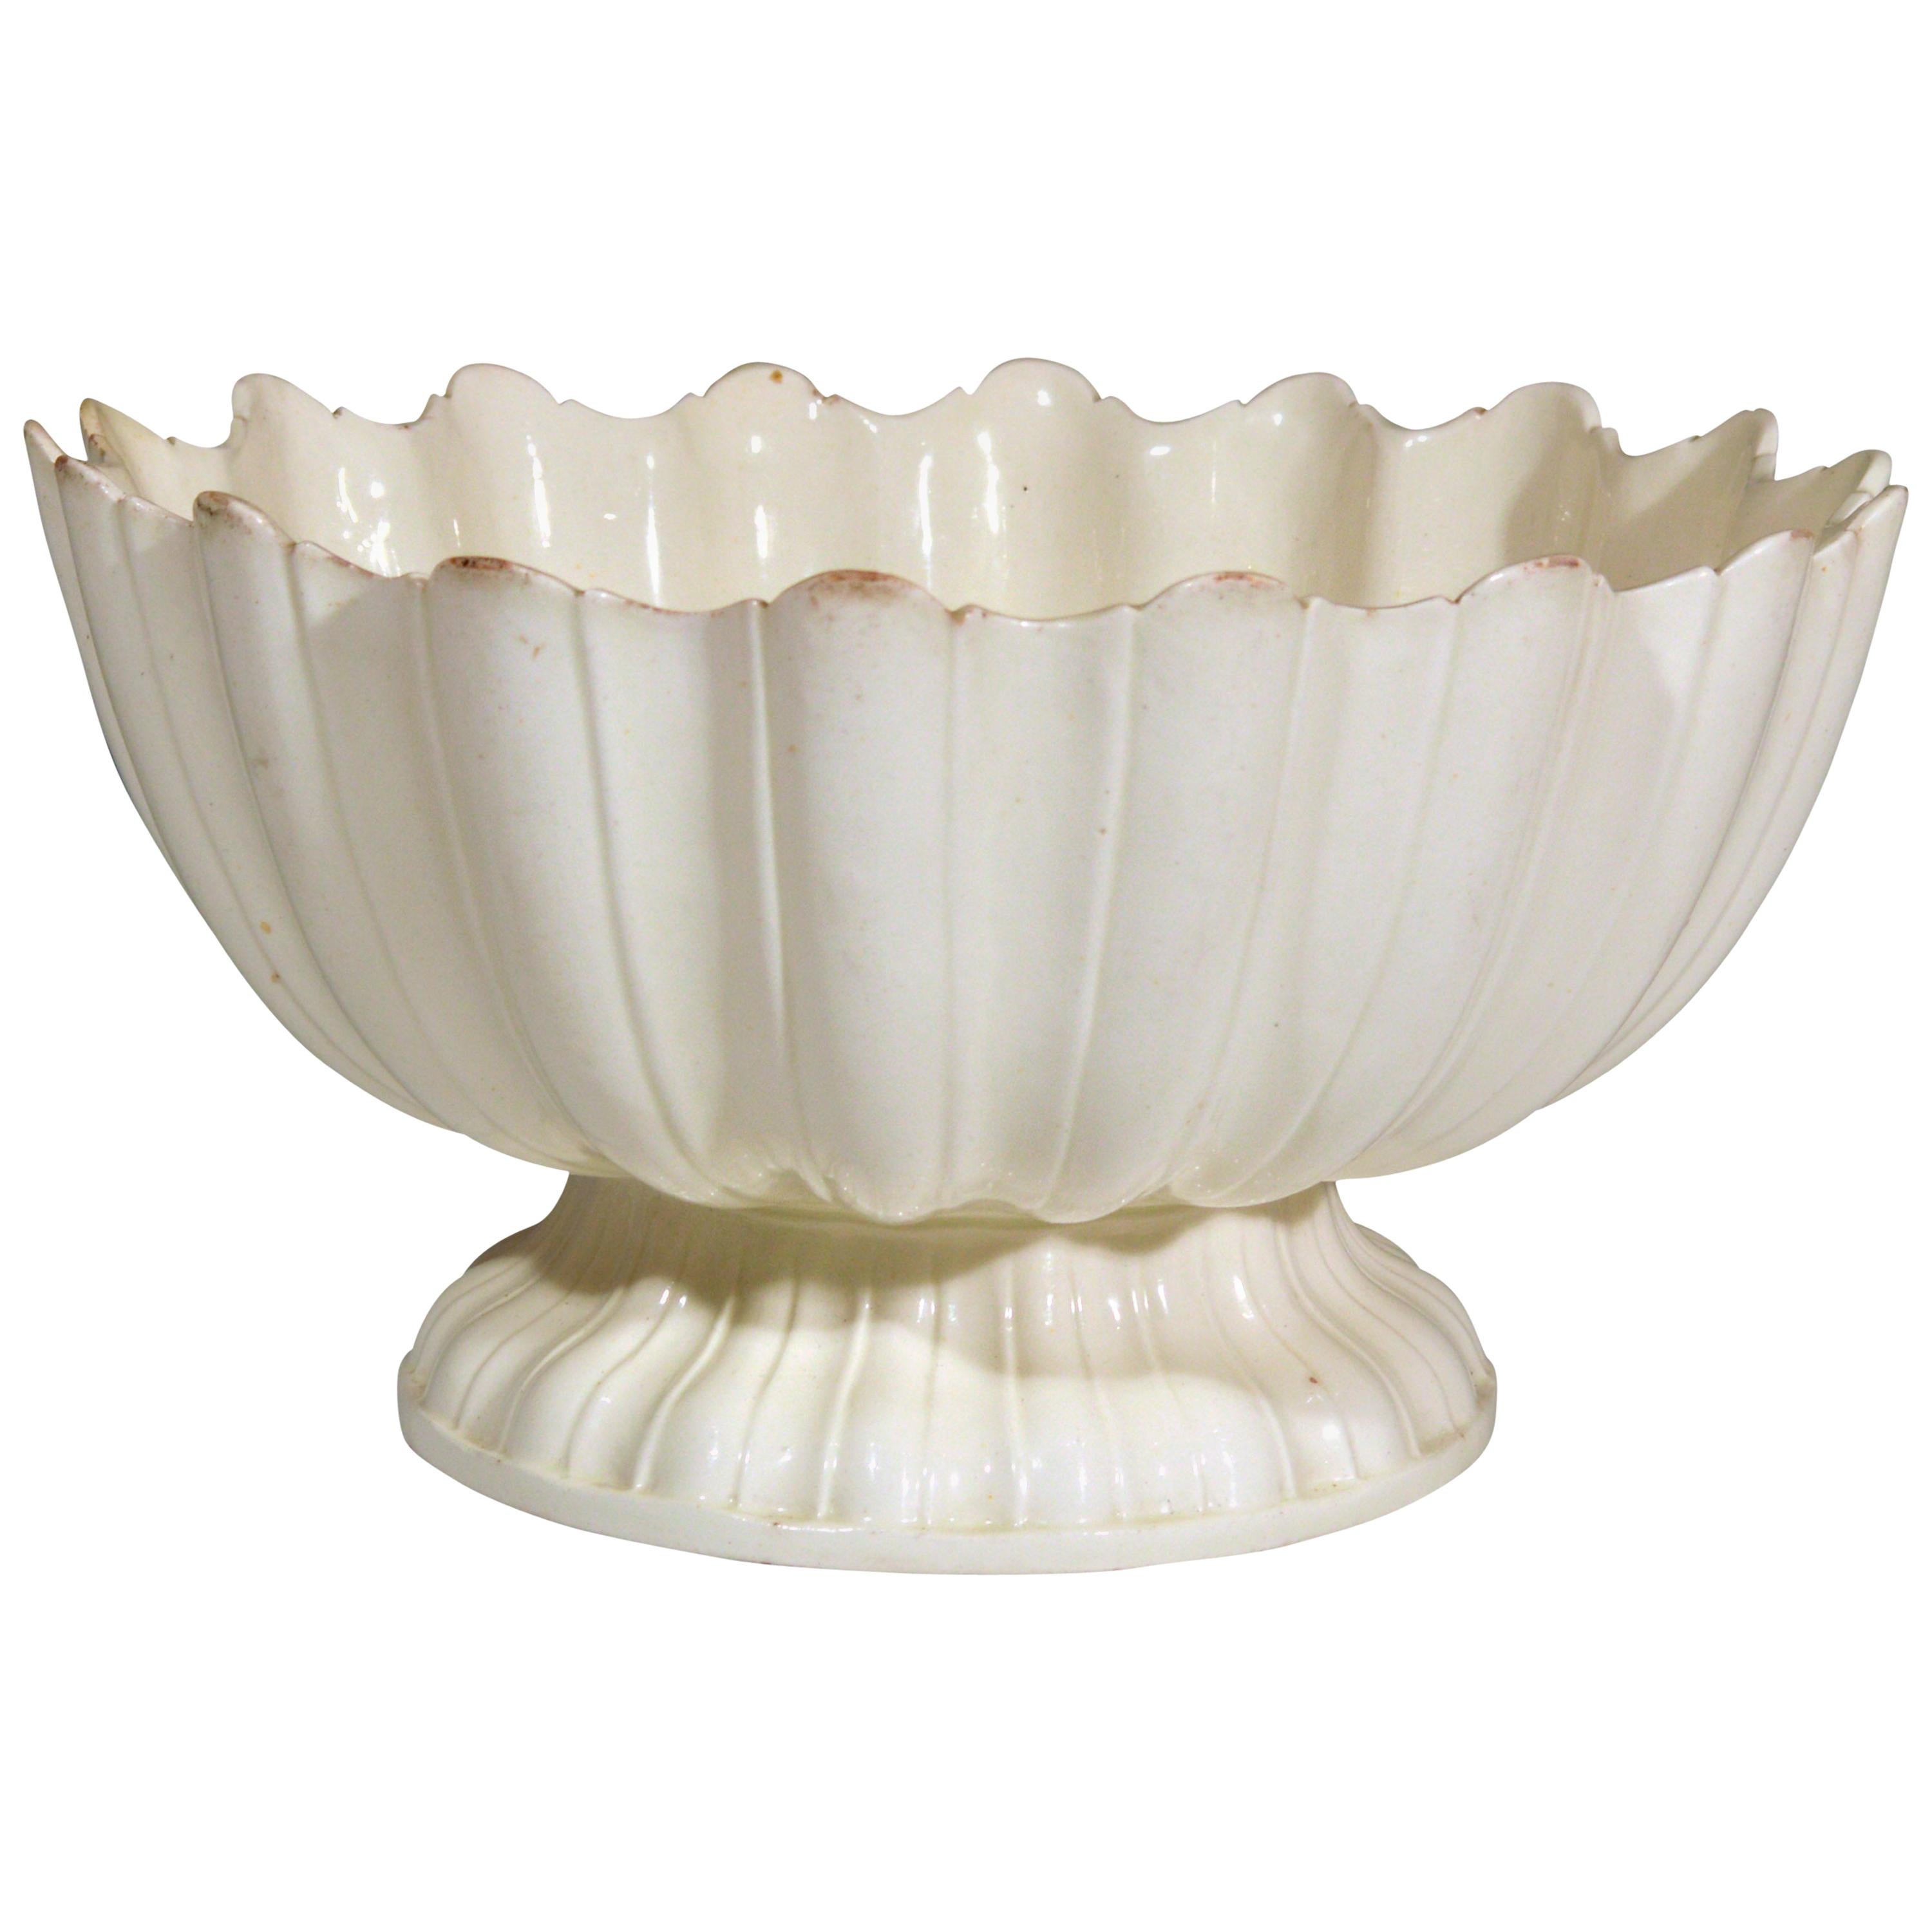 Large English Pottery Circular Plain Creamware Fruit Bowl, circa 1780s-1790s